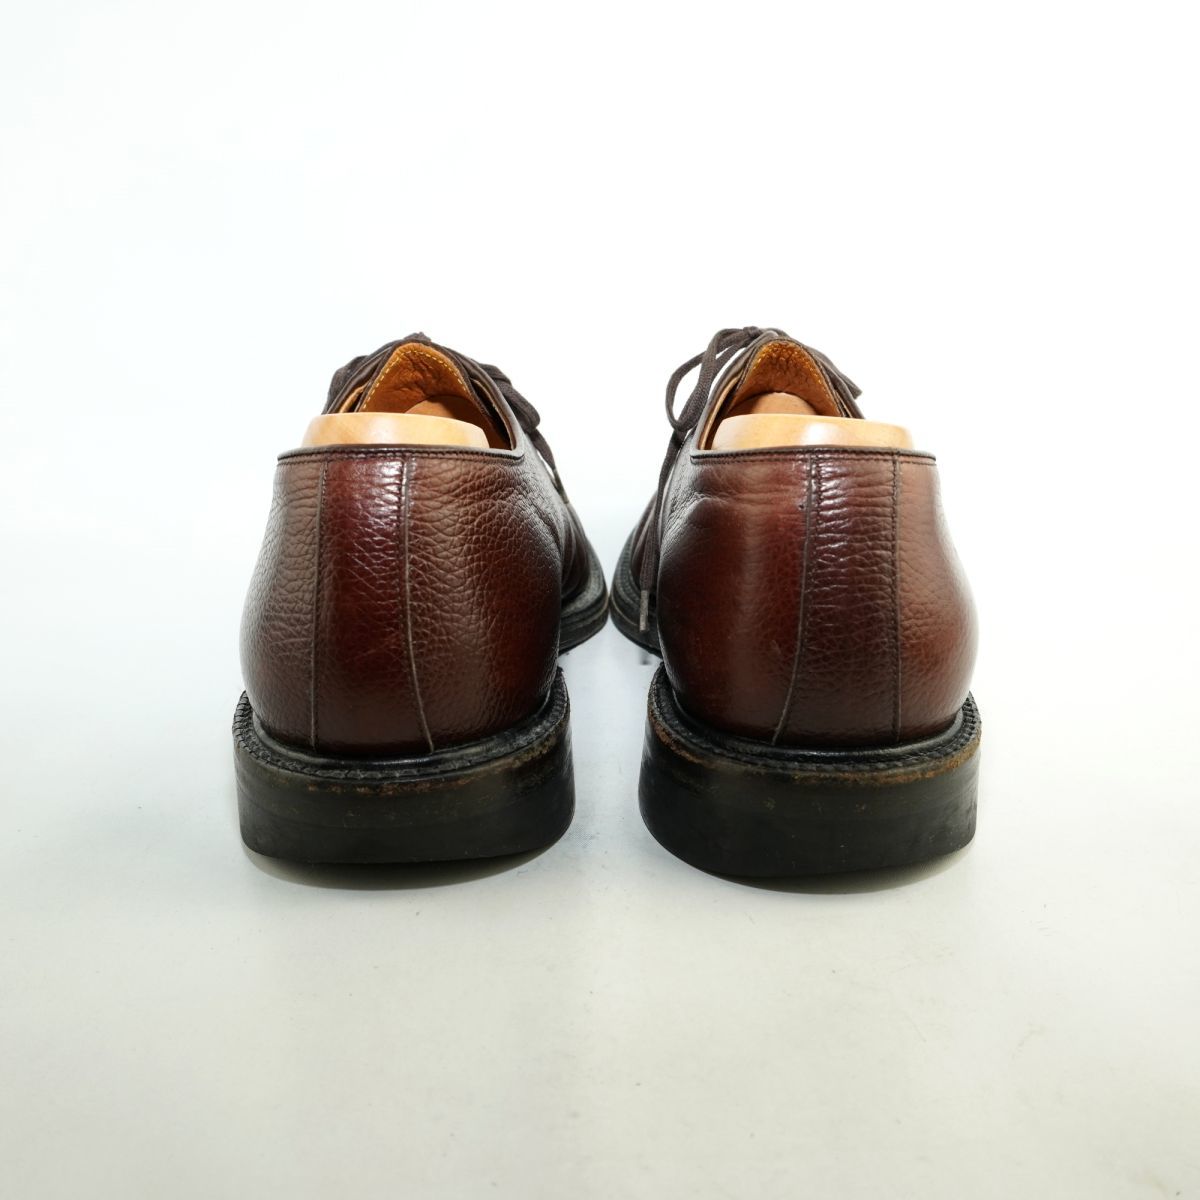 Jarman shoes for men ジャーマン 25 1/2 25.5 革靴 ビジネスシューズ 外羽根式 メンズ レザー 本革 茶色 ブラウン/EC60_画像5